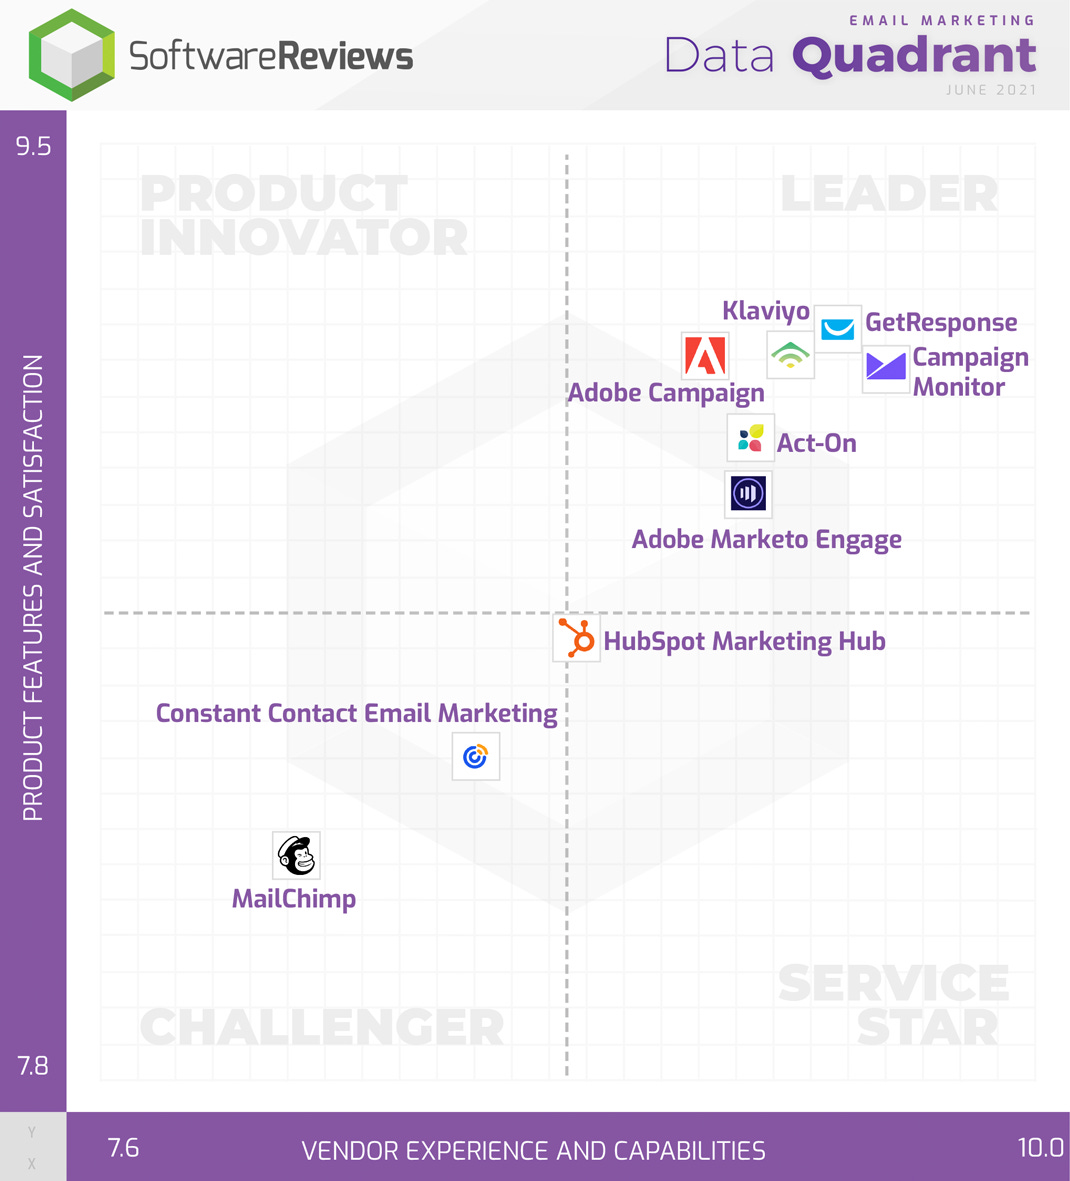 Email Marketing Data Quadrant